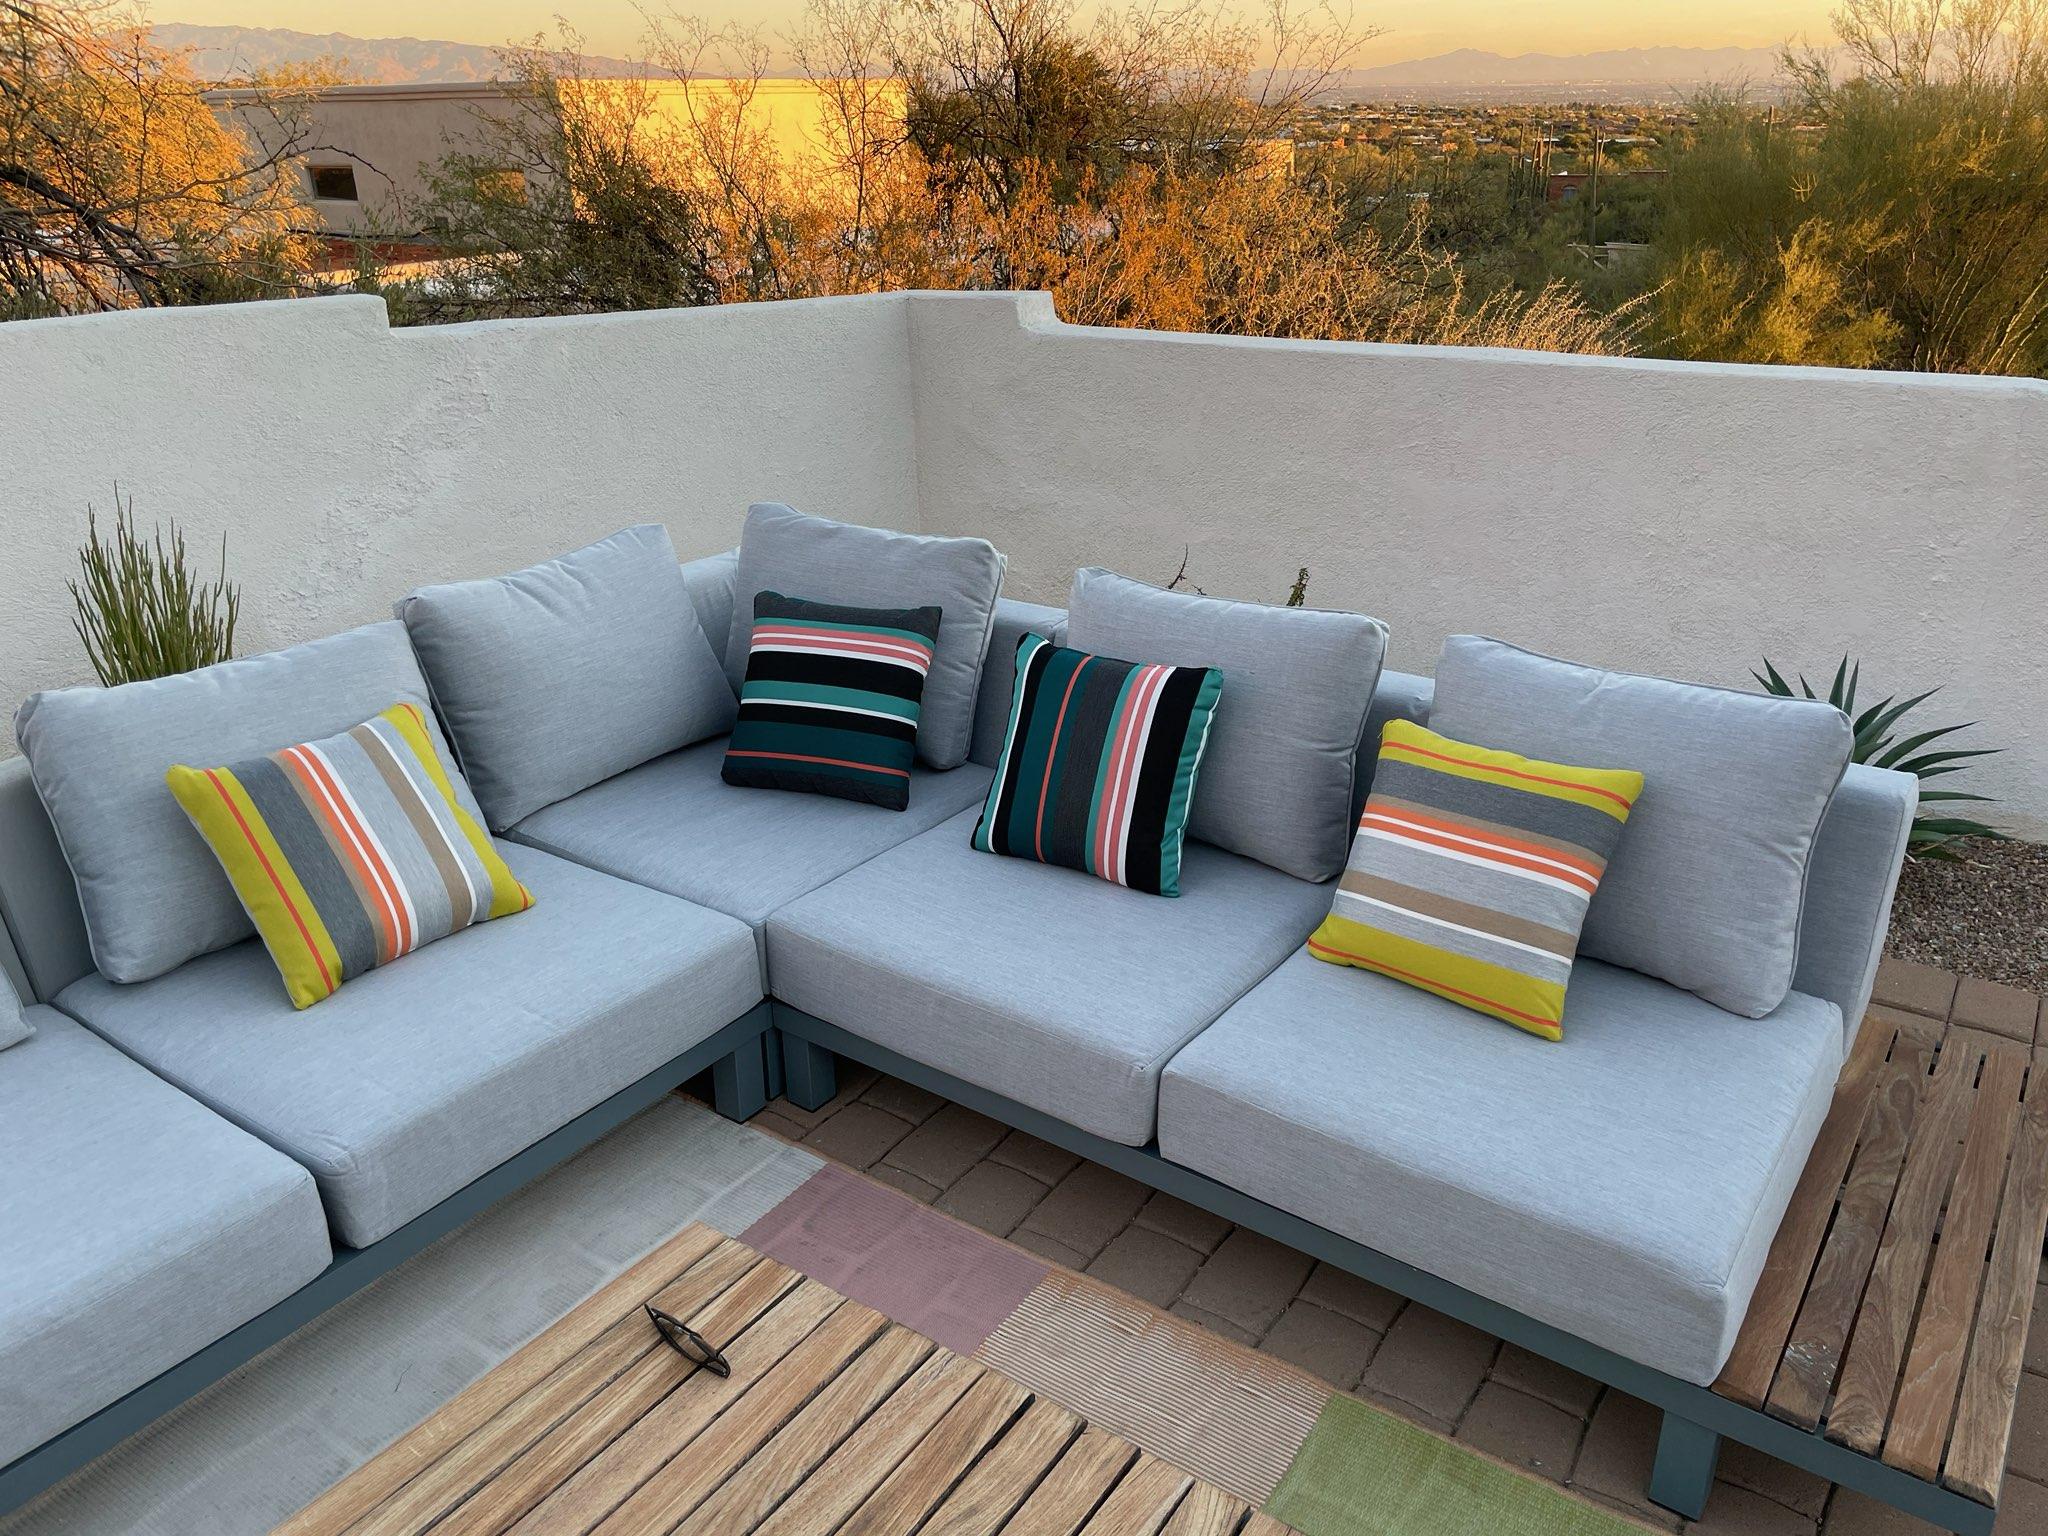 Outdoor sofa set with pillows